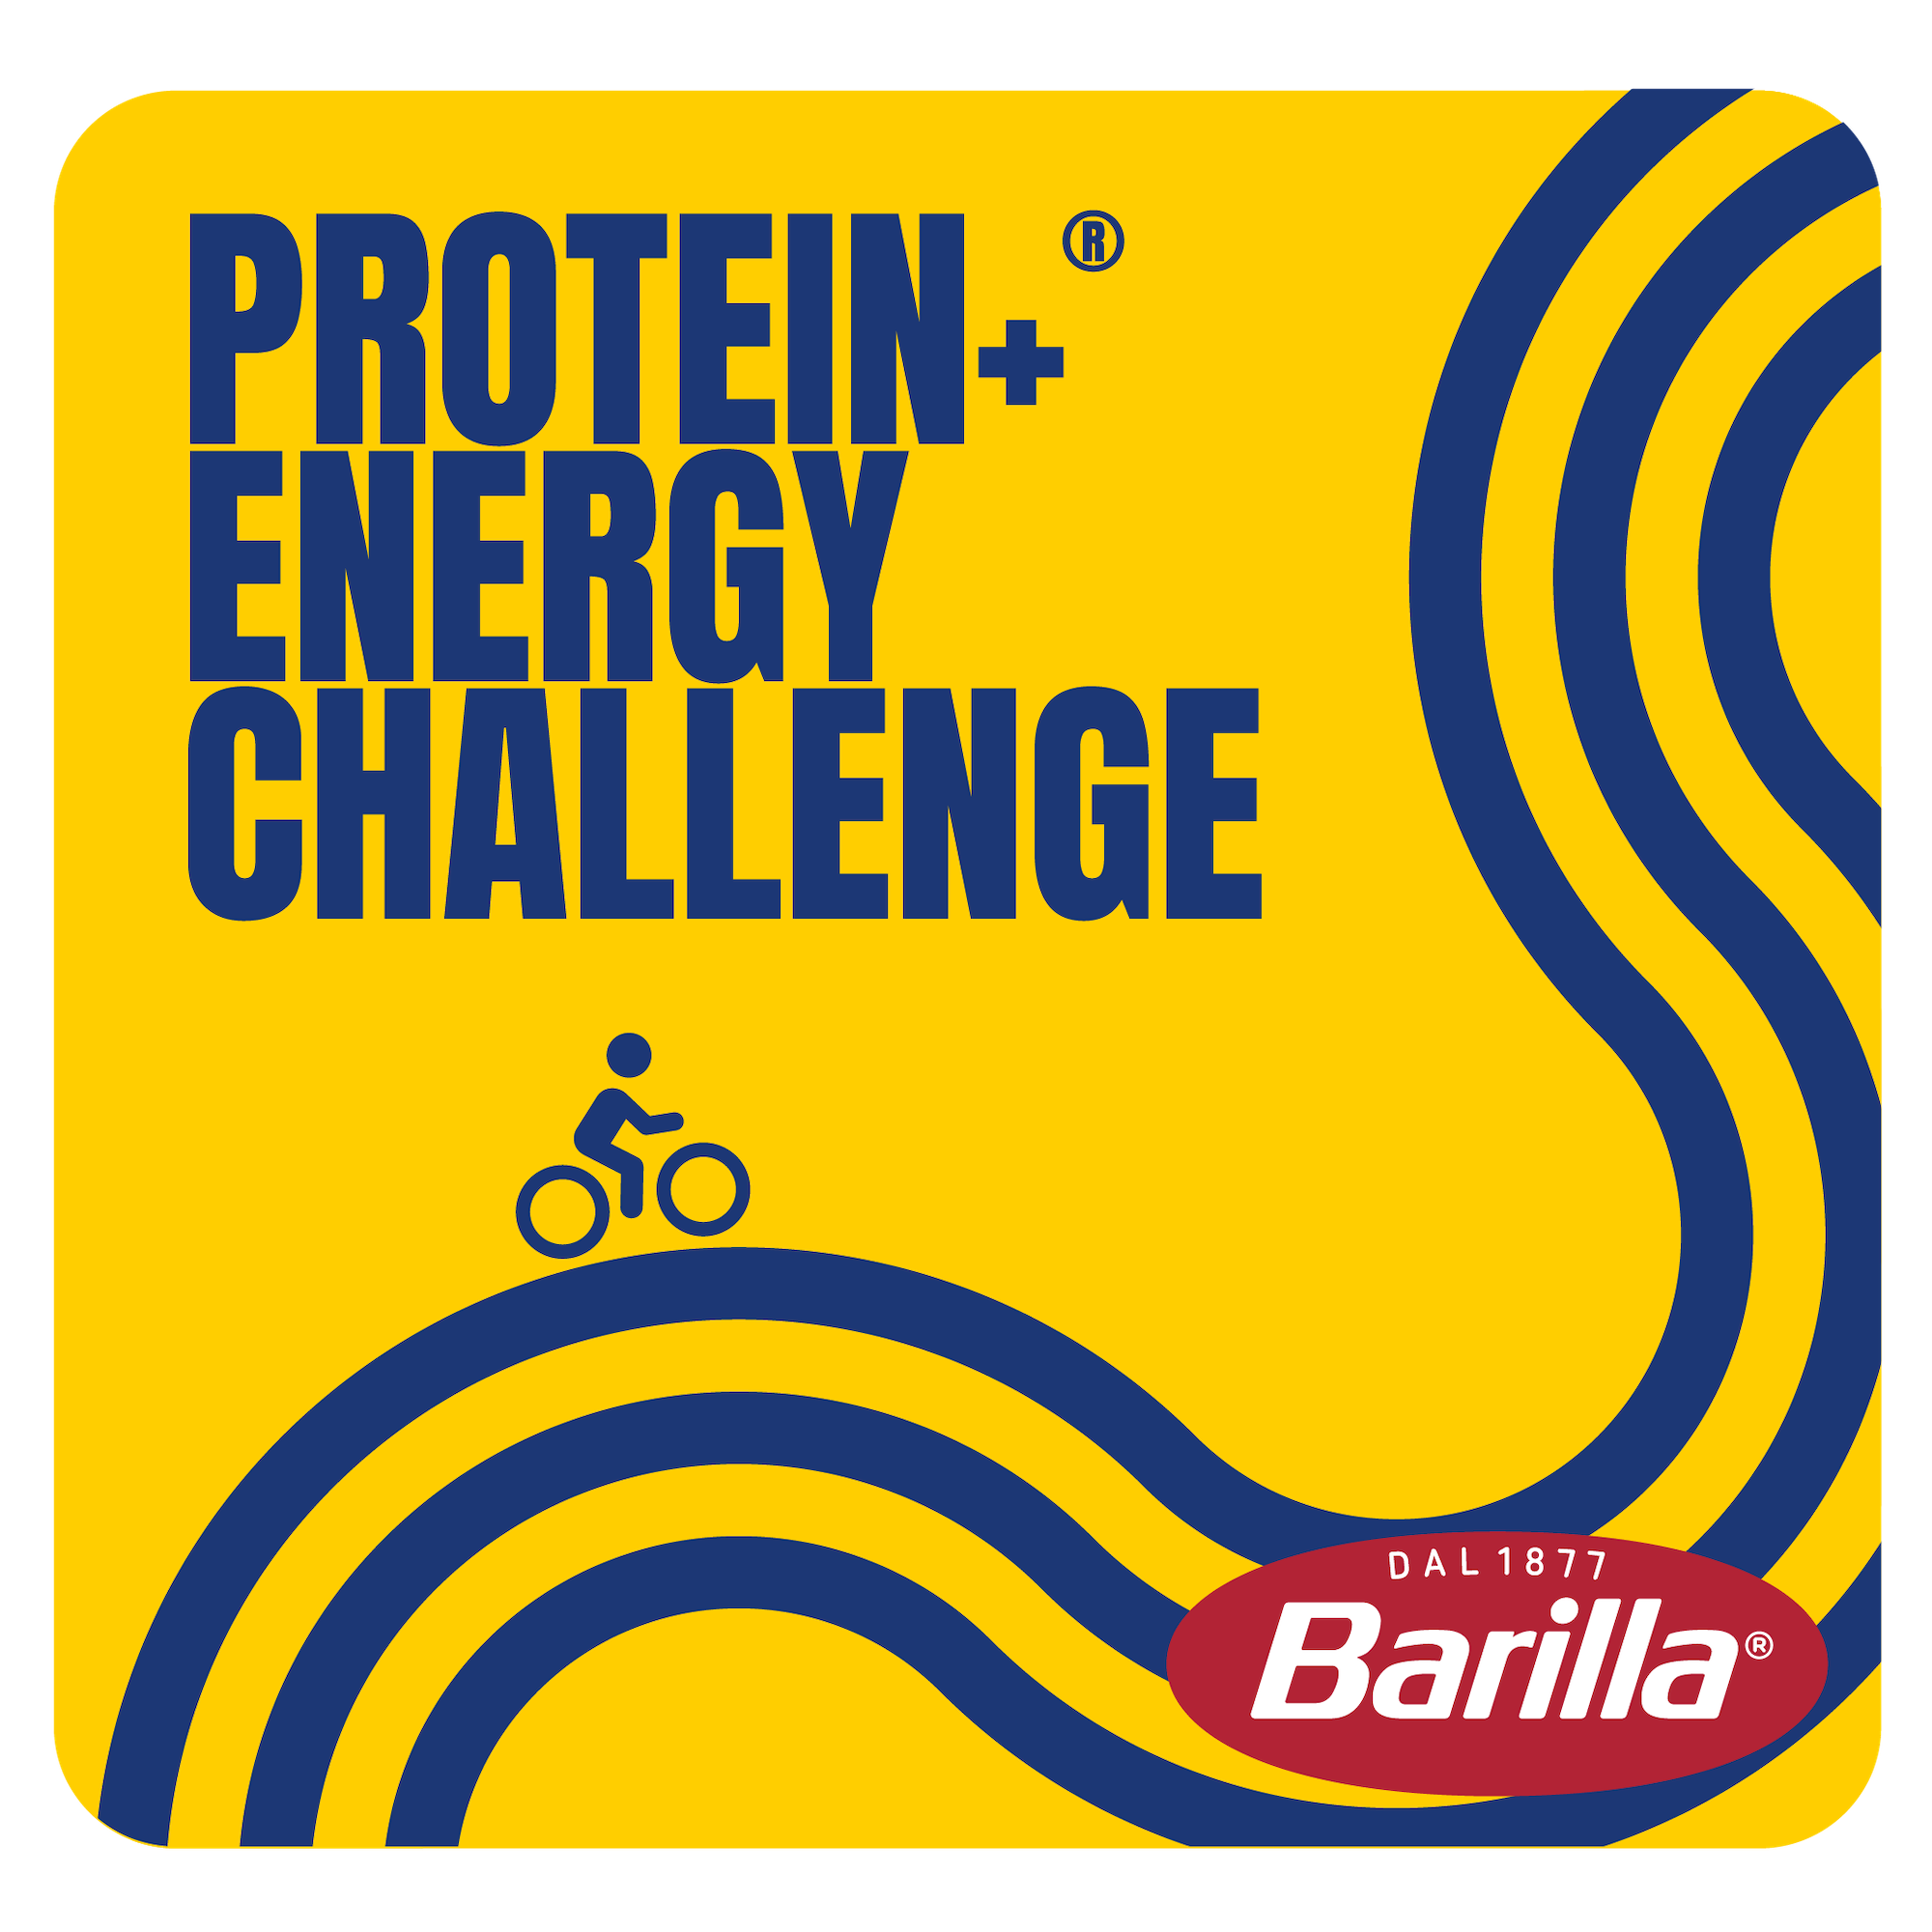 Barilla Protein+® Energy Challenge